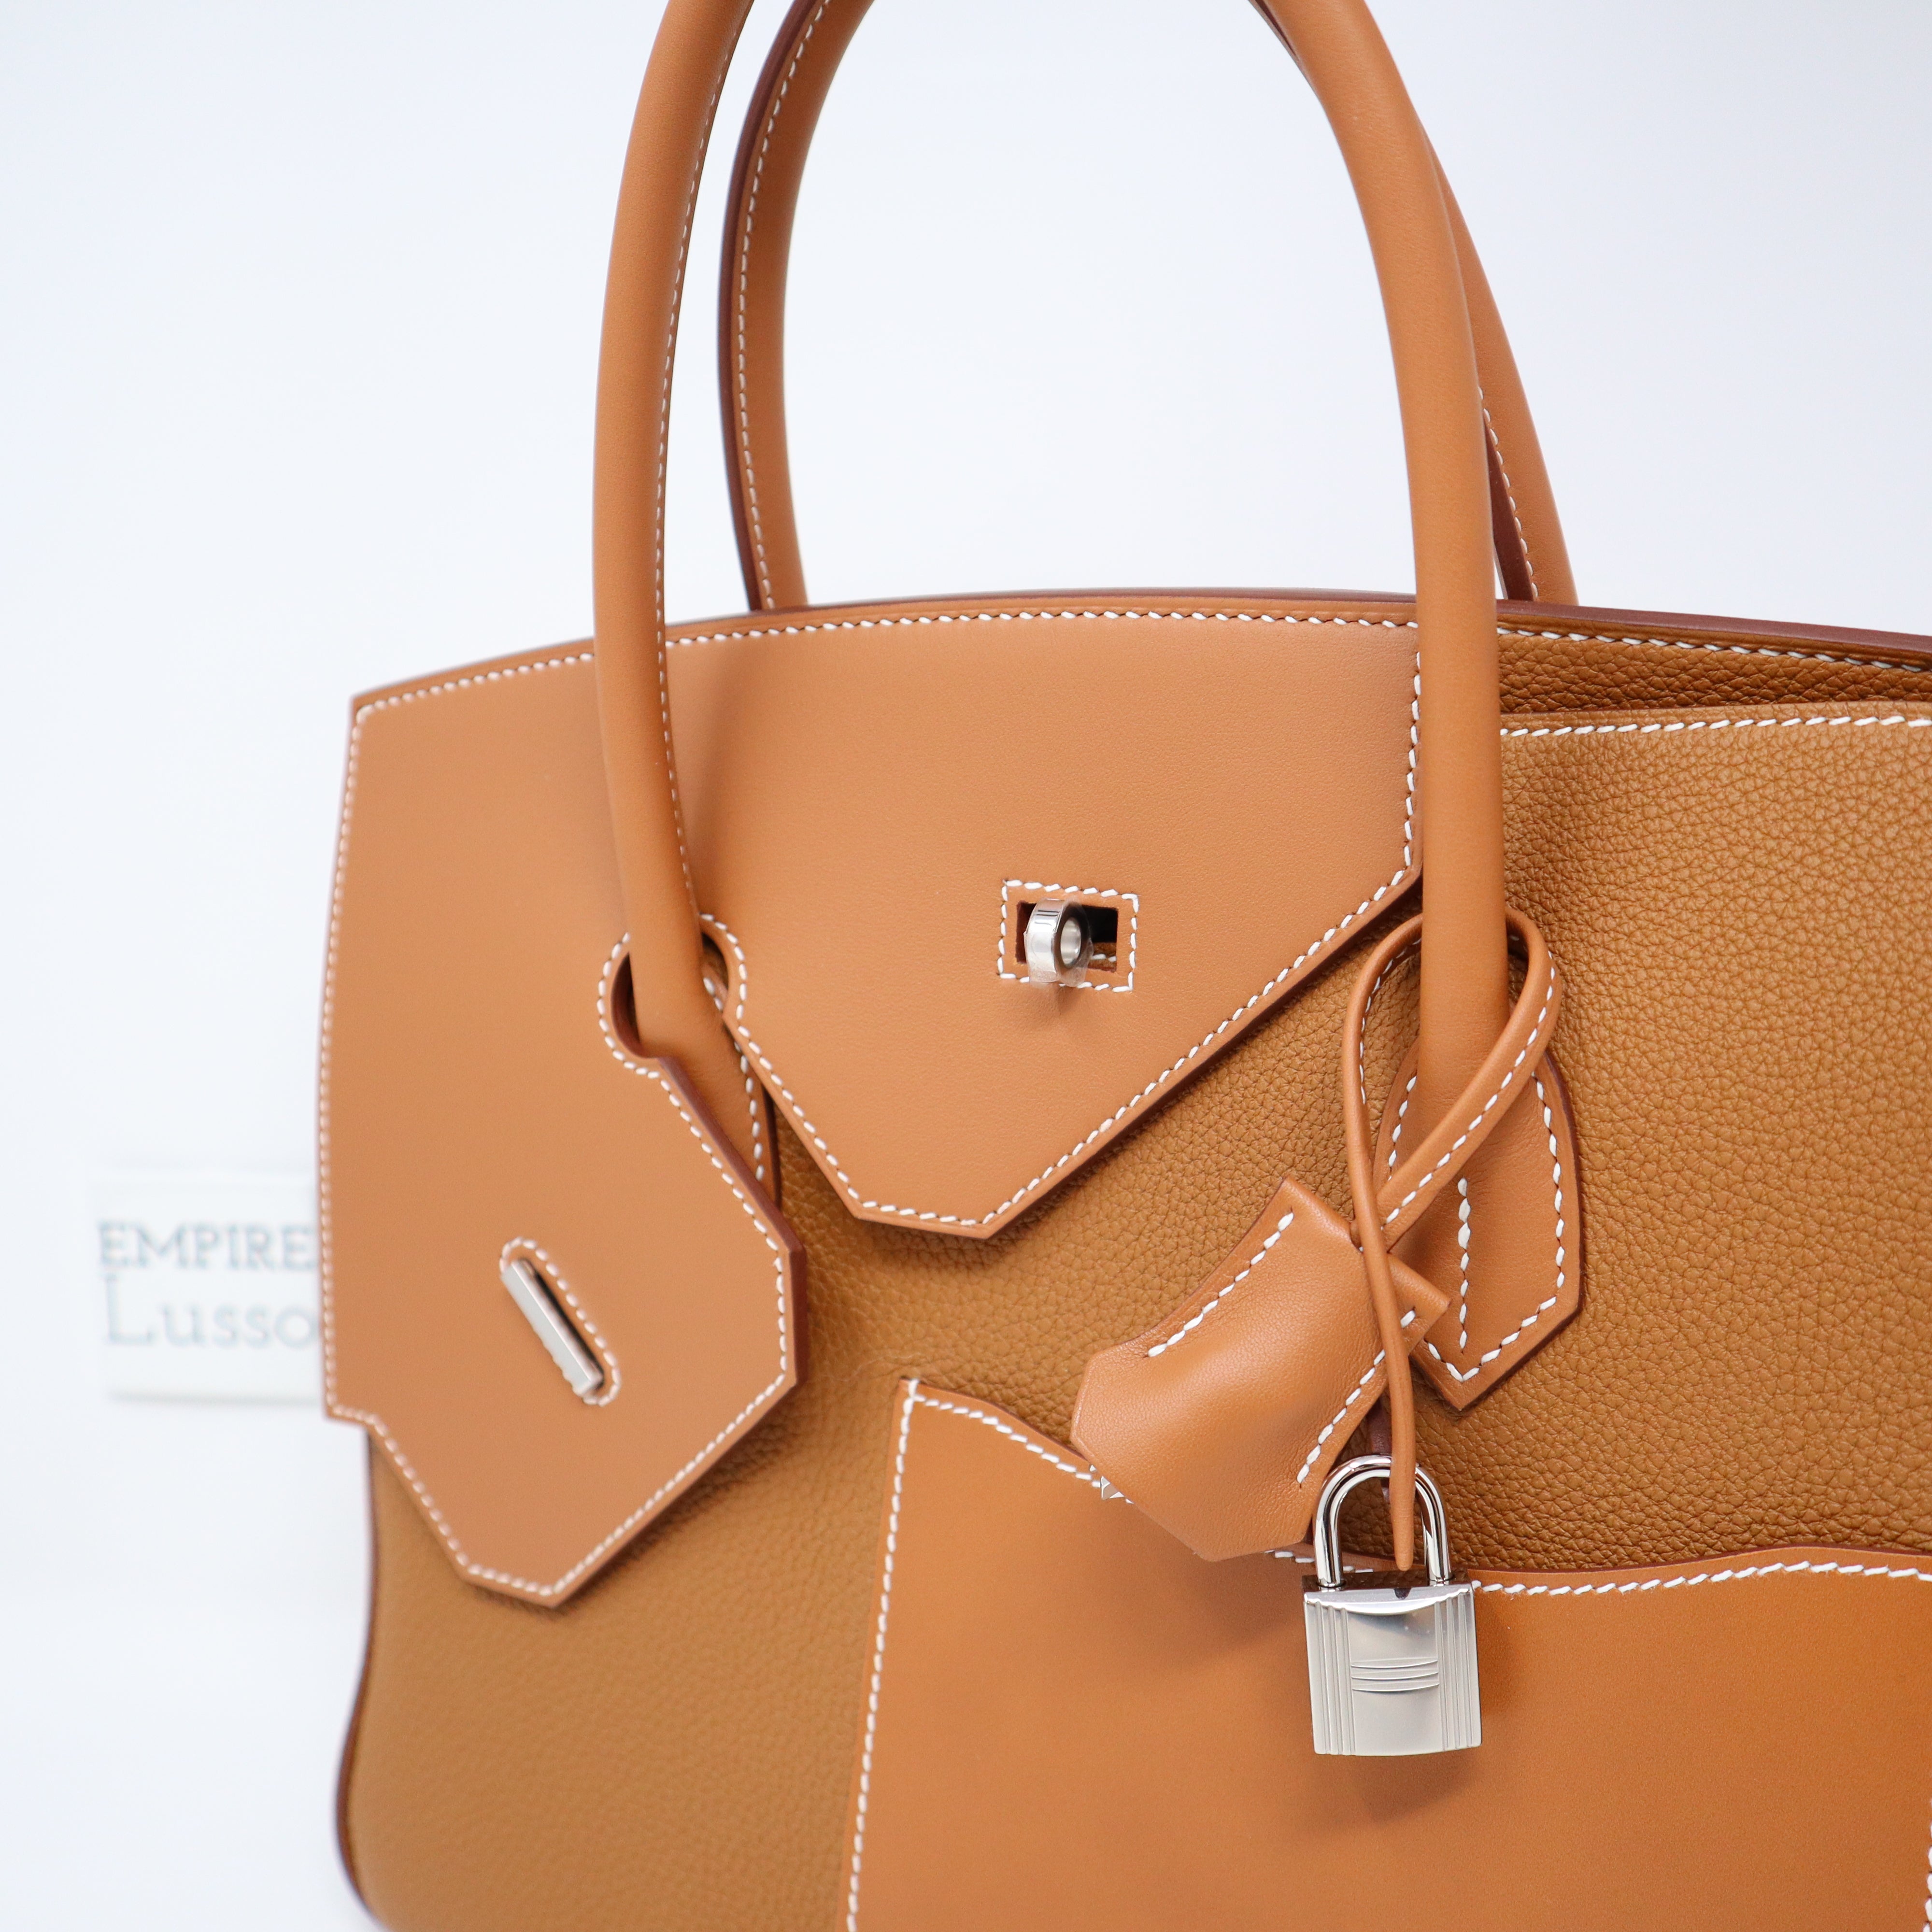 FWRD Renew Hermes Togo Birkin 35 Bag in Brown